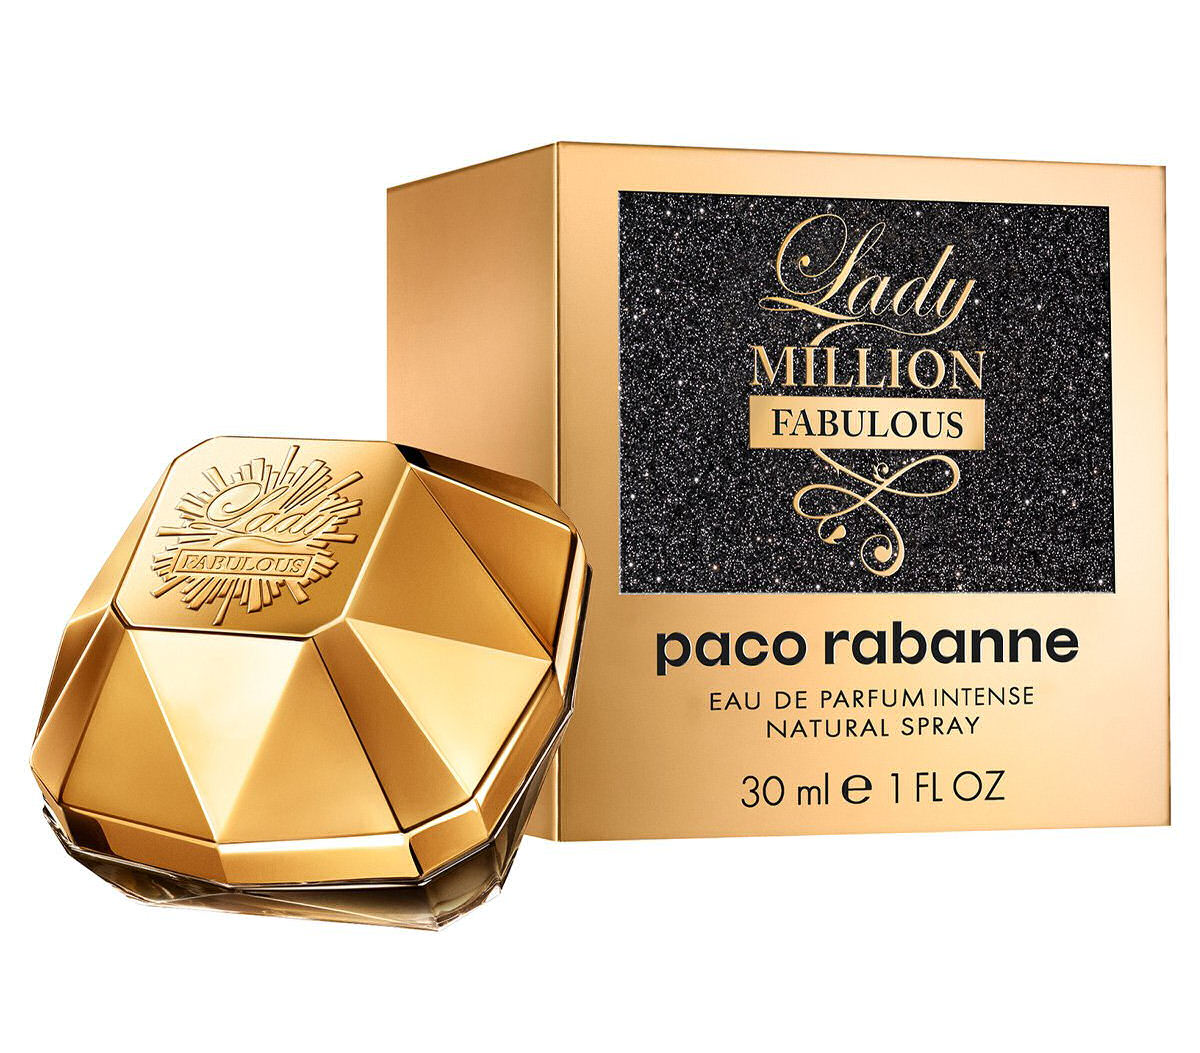 Paco Rabanne - Lady Million Fabulous